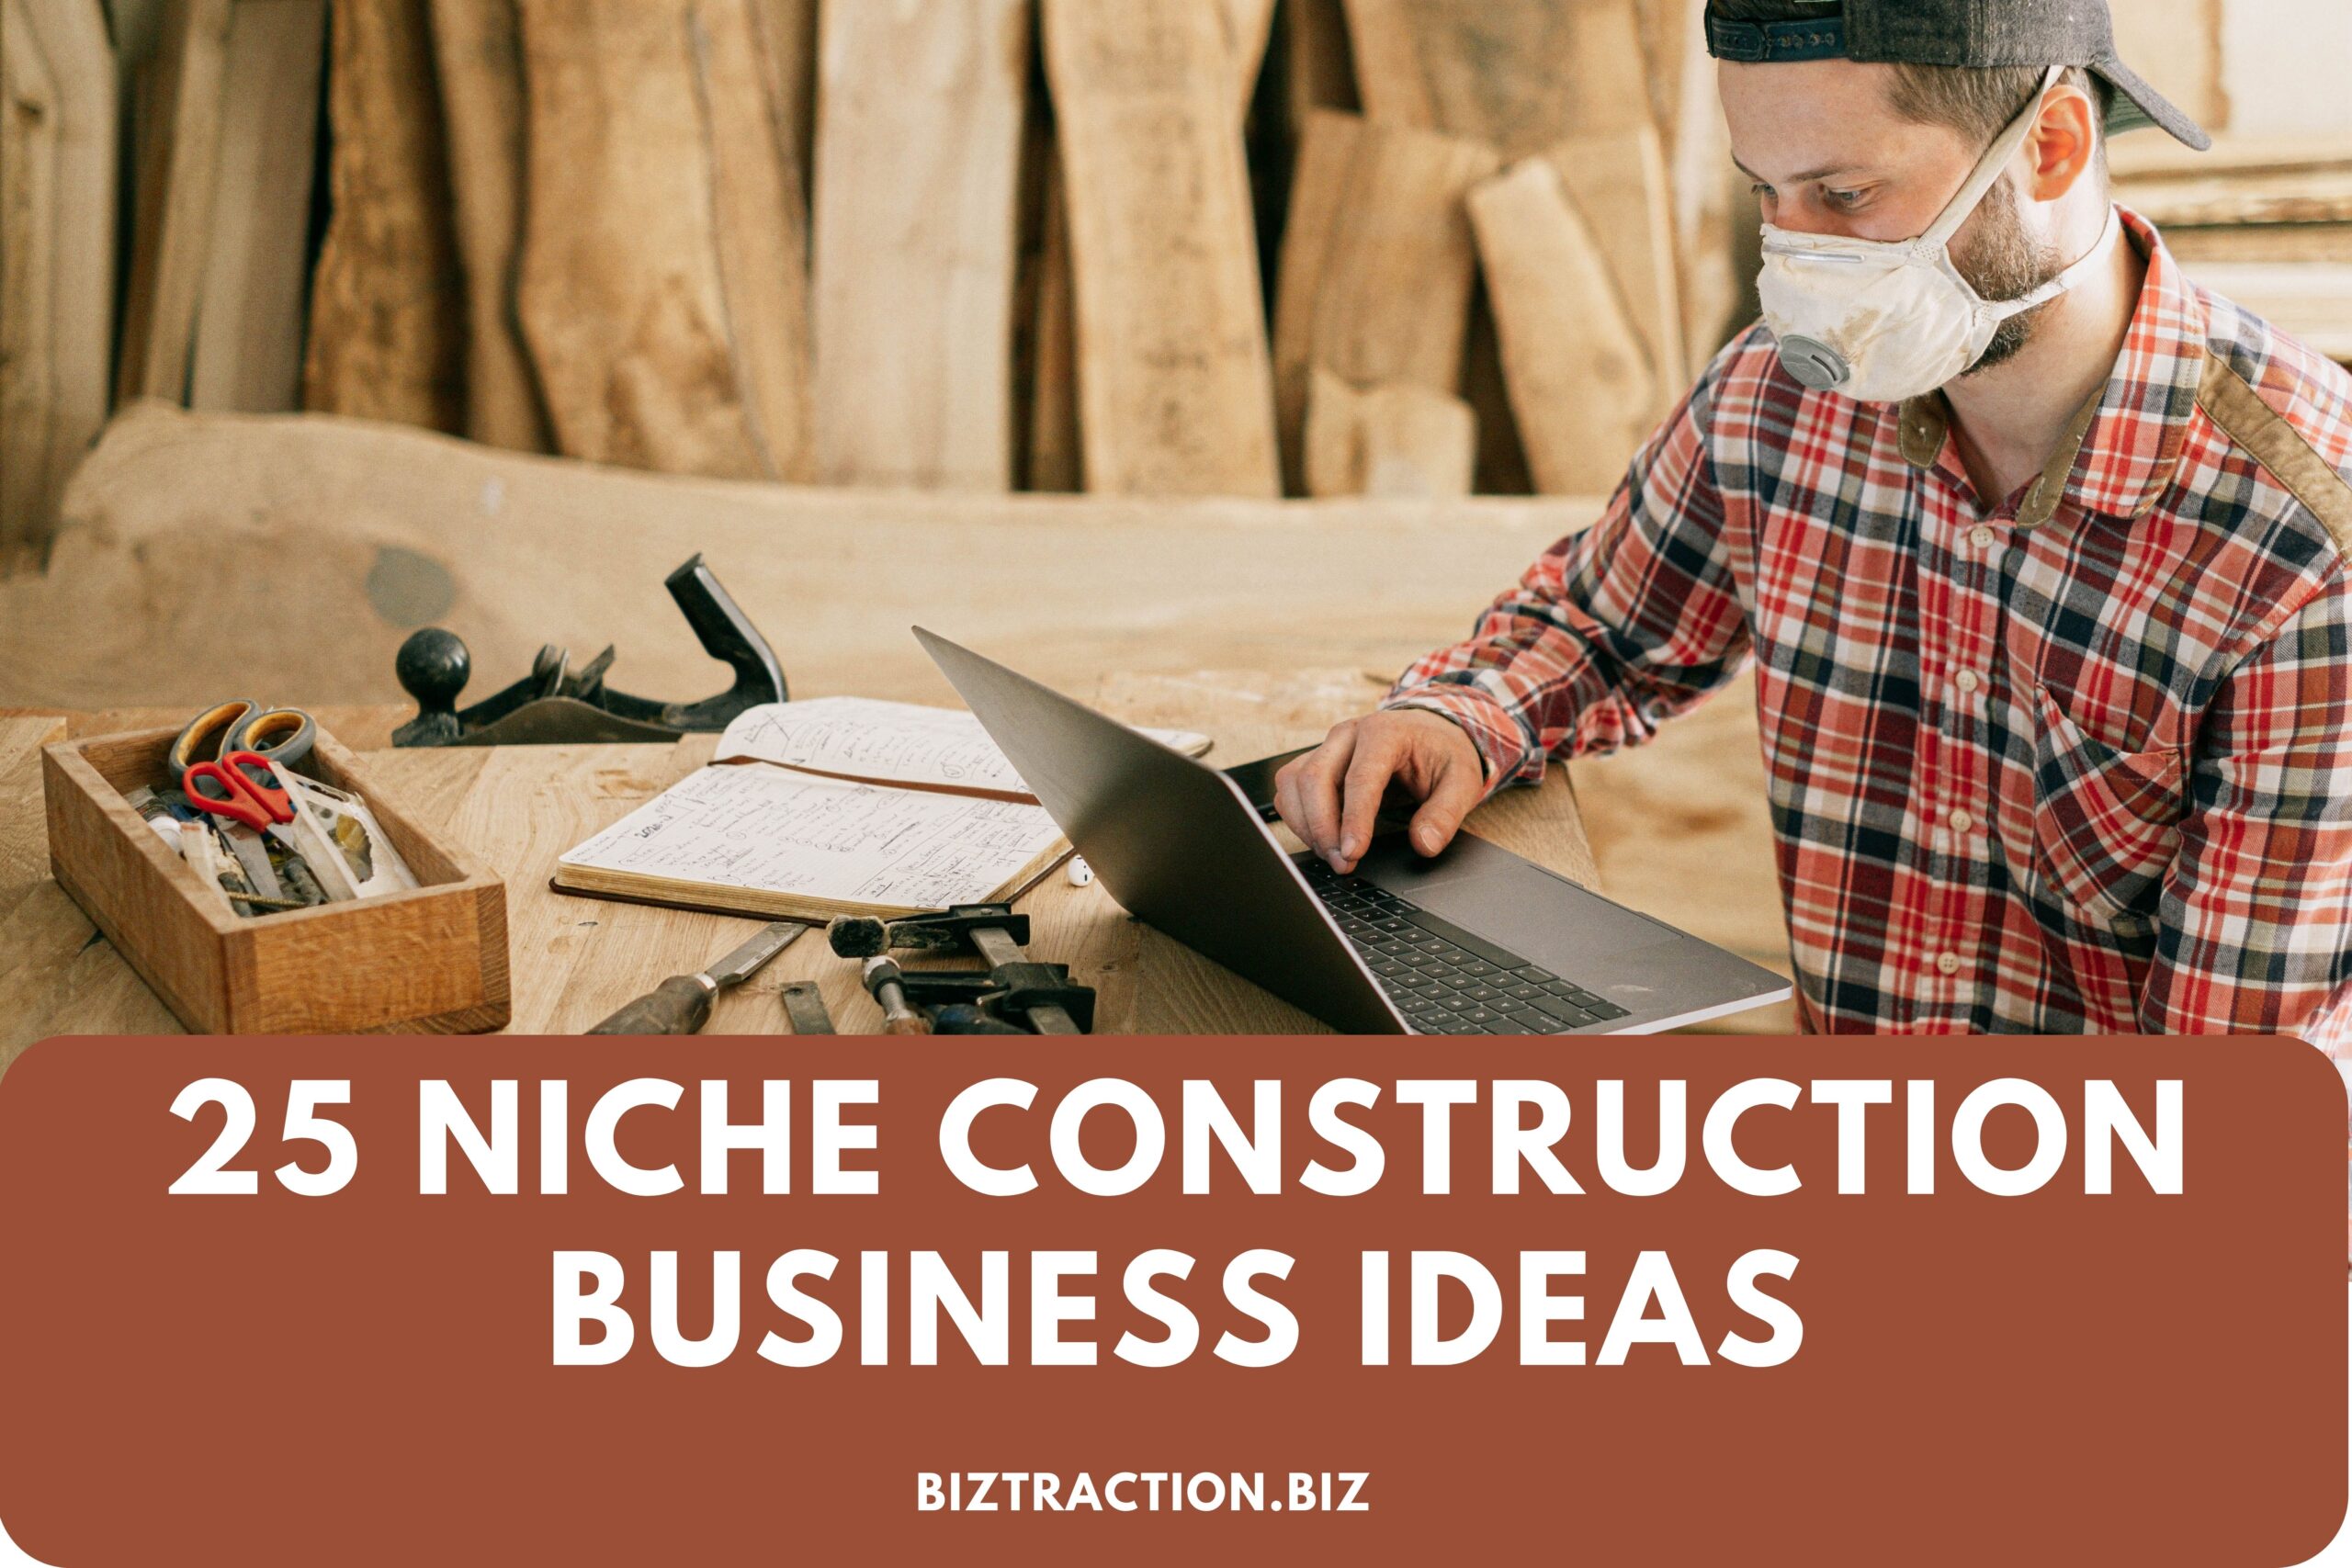 25 Niche Construction Business Ideas